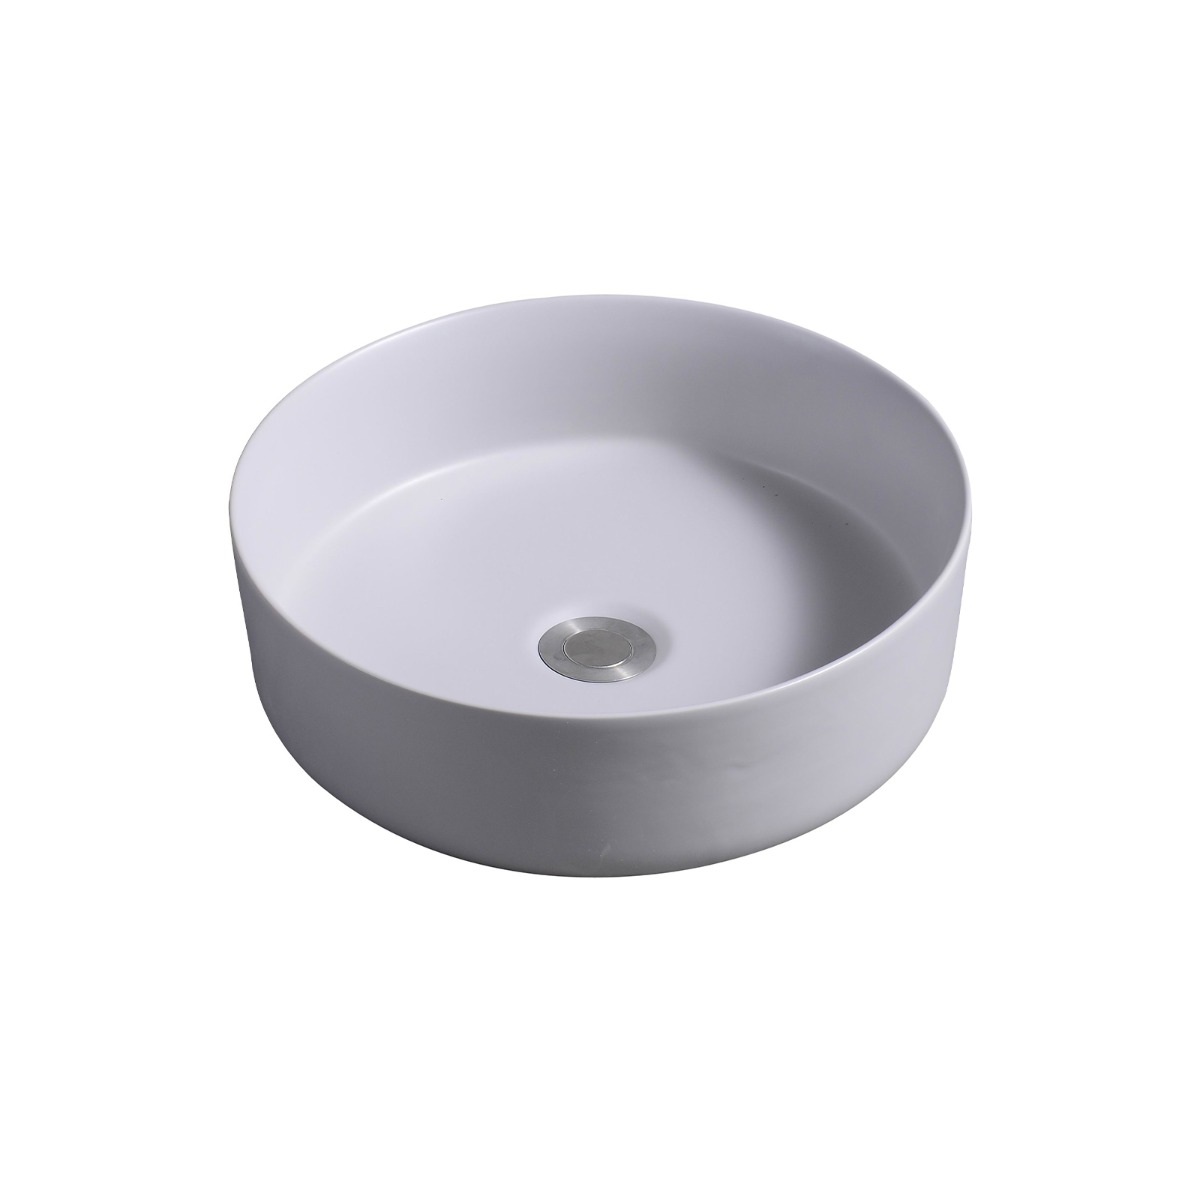 7844 Ceramic Vert Round Countertop Basin in Cement